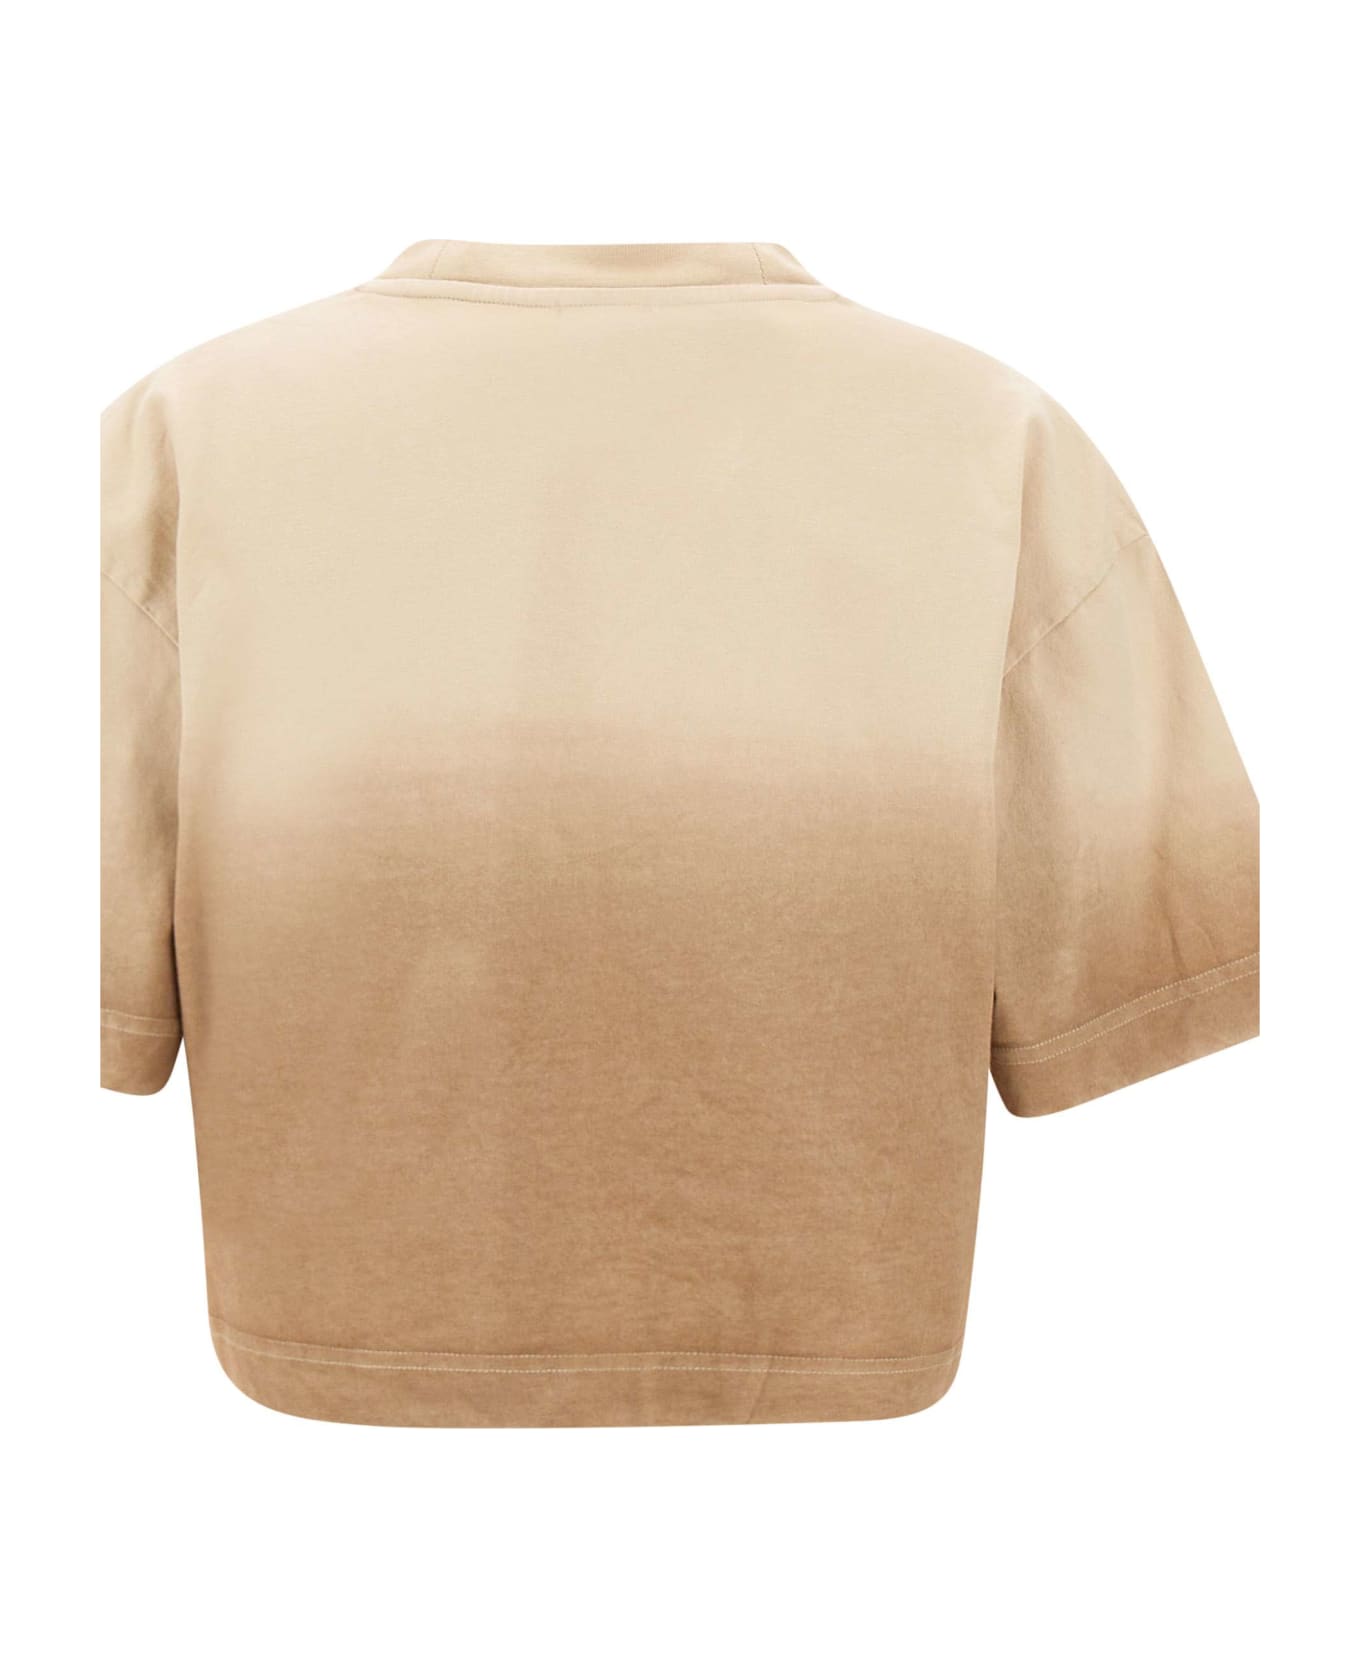 Woolrich 'dip Dye' Cotton T-shirt - BEIGE Tシャツ